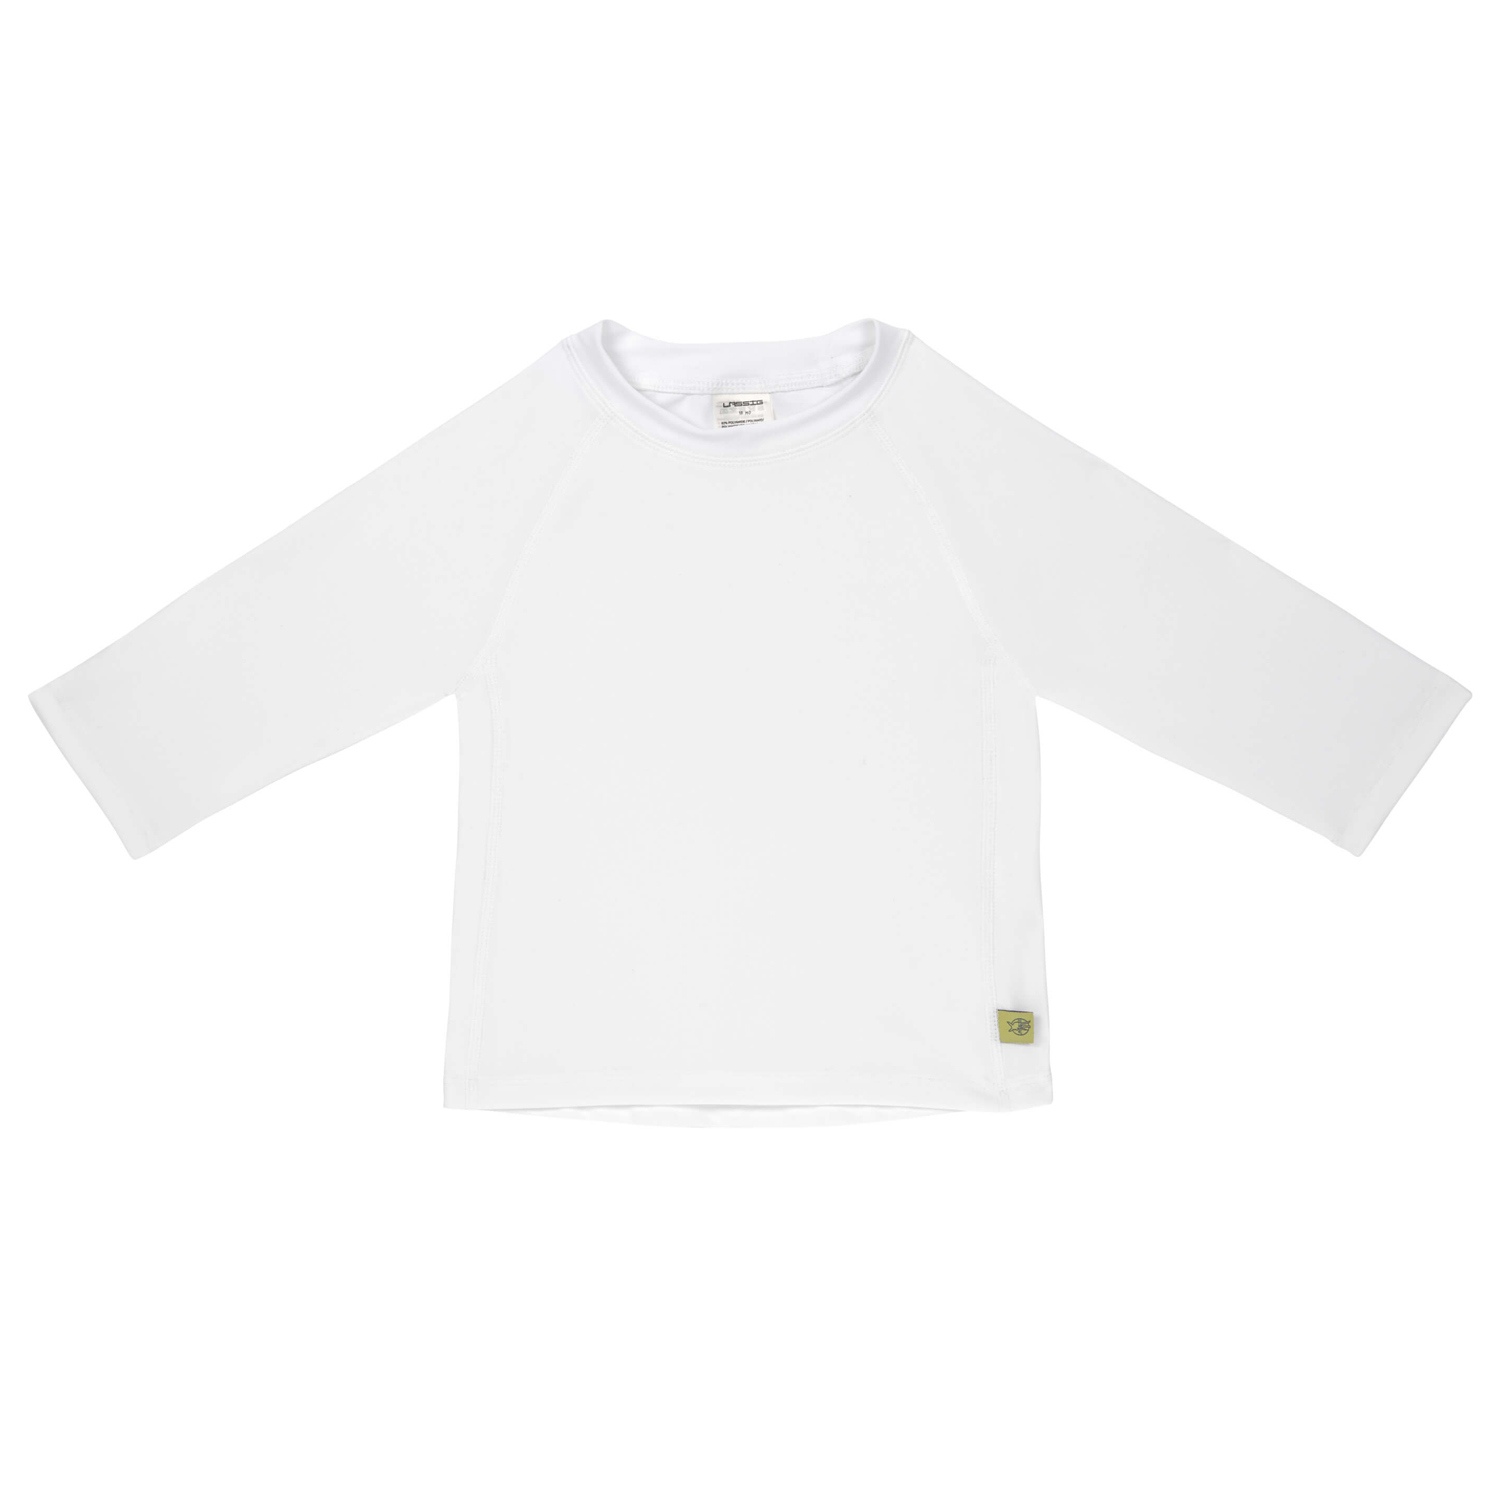 T Shirt Manches Longues Protection Uv Blanc De Lassig T Shirts Polos Chemises Garcon Aubert